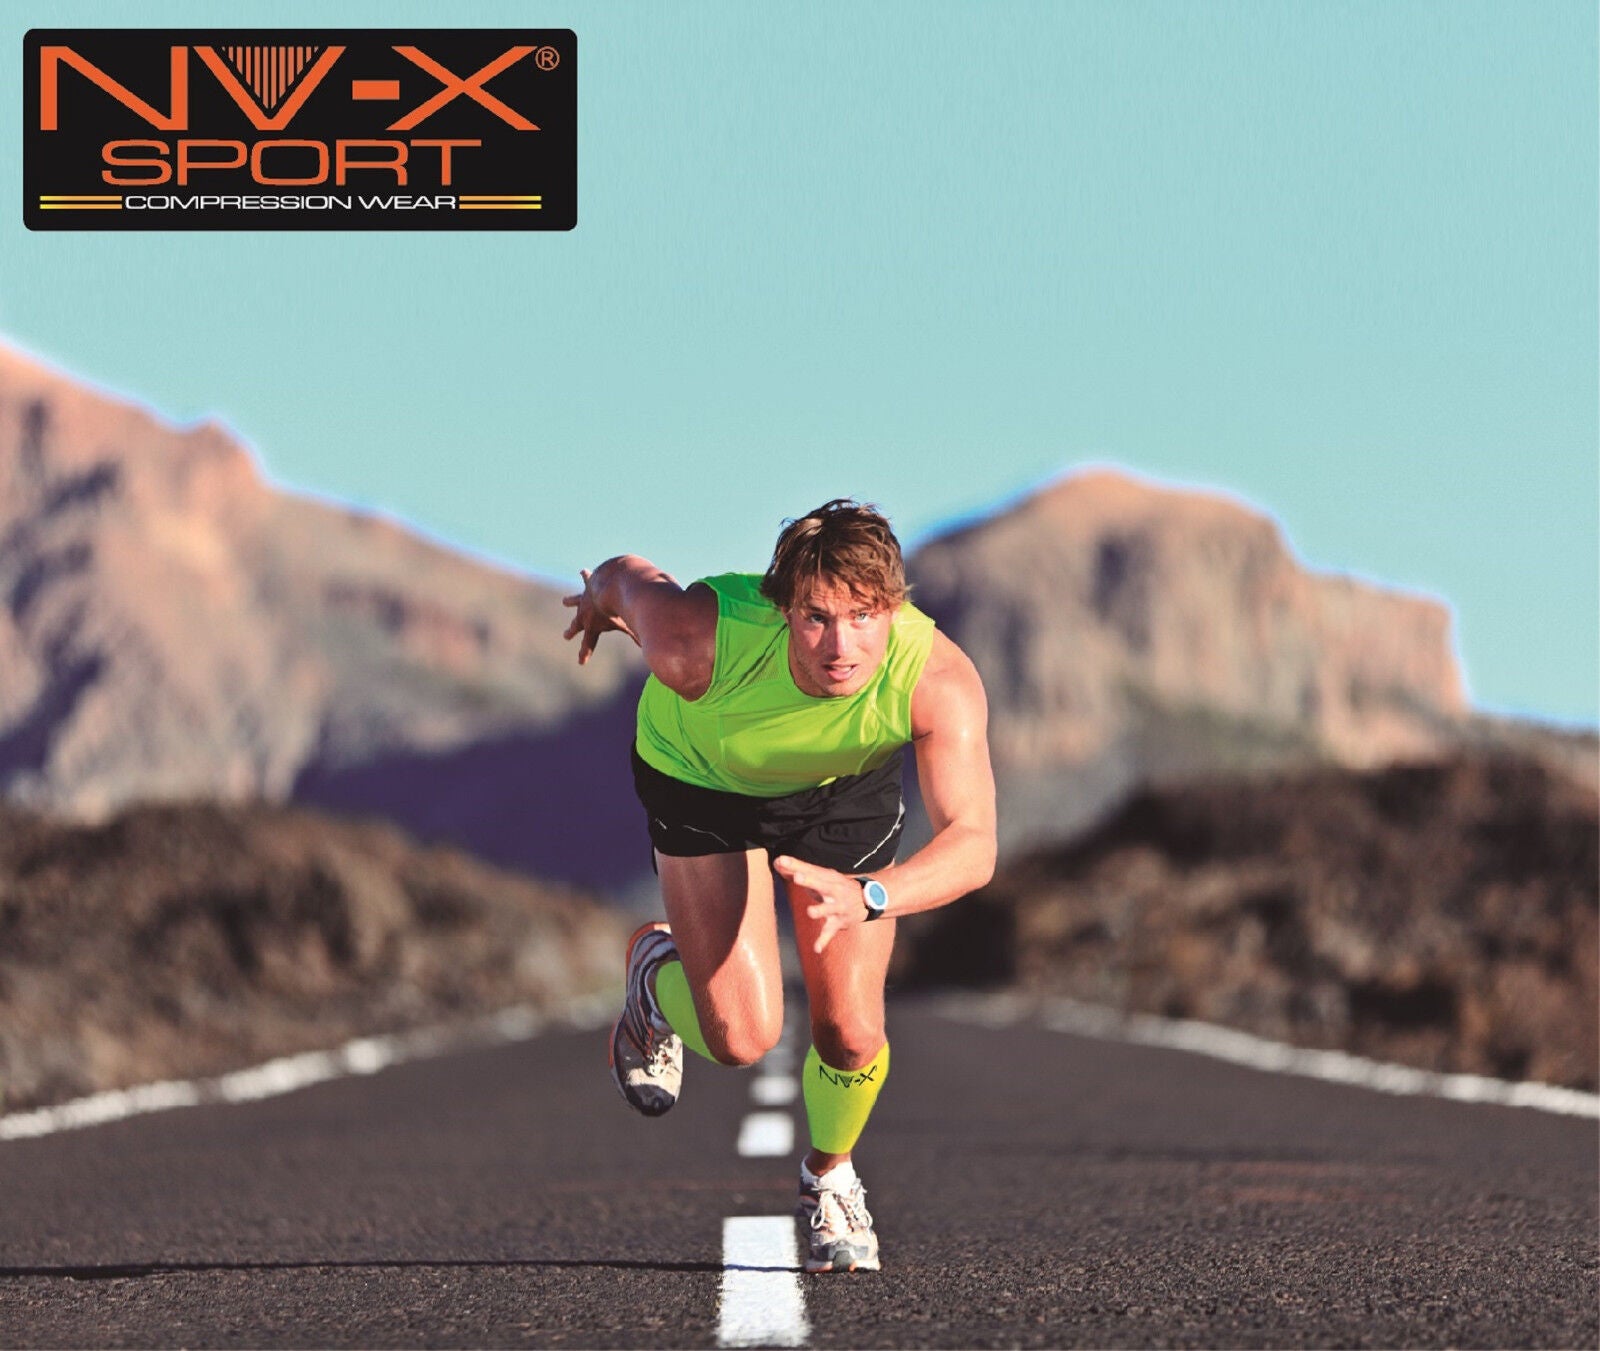 NV-X SPORT GRADUATED COMPRESSION LEG SLEEVES (15-20 MMHG) SHOE SIZE 7.